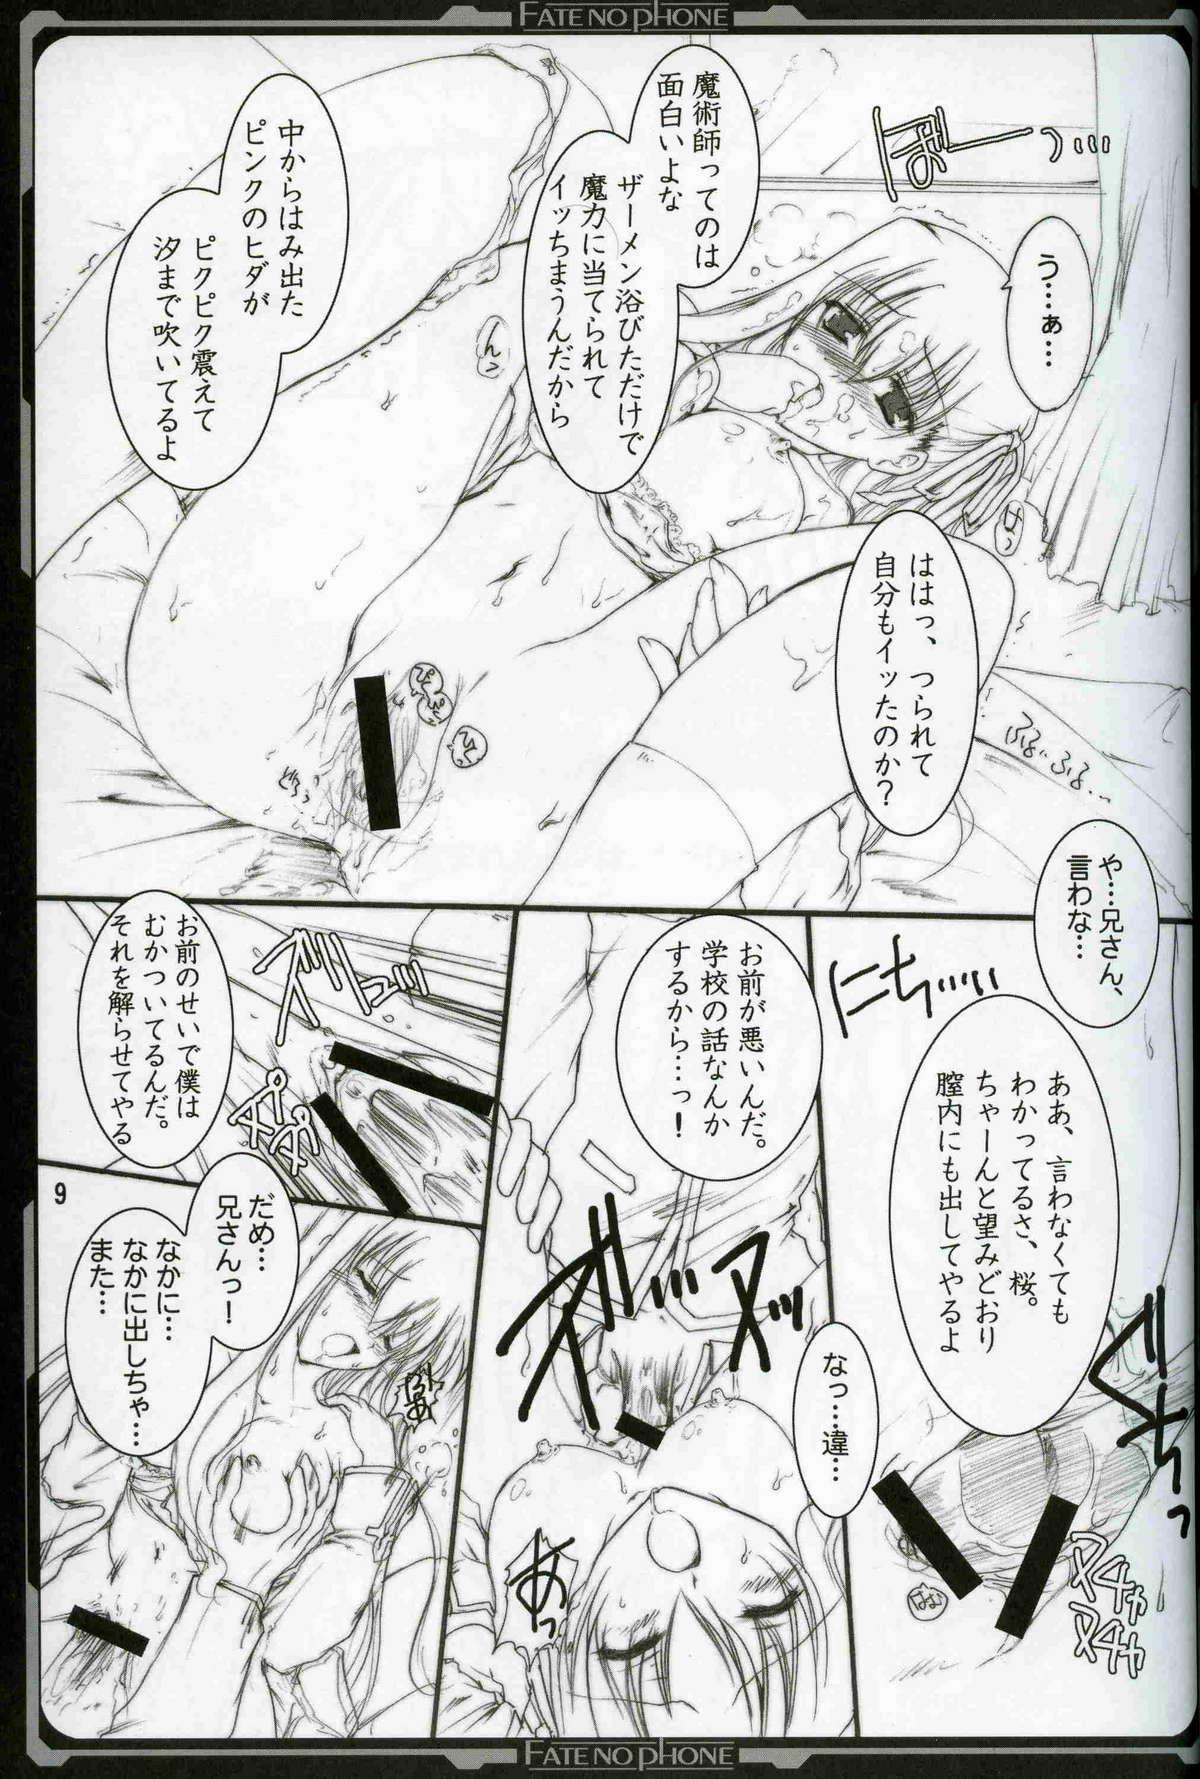 Mask Fate/no phone - Fate stay night Lez Hardcore - Page 8